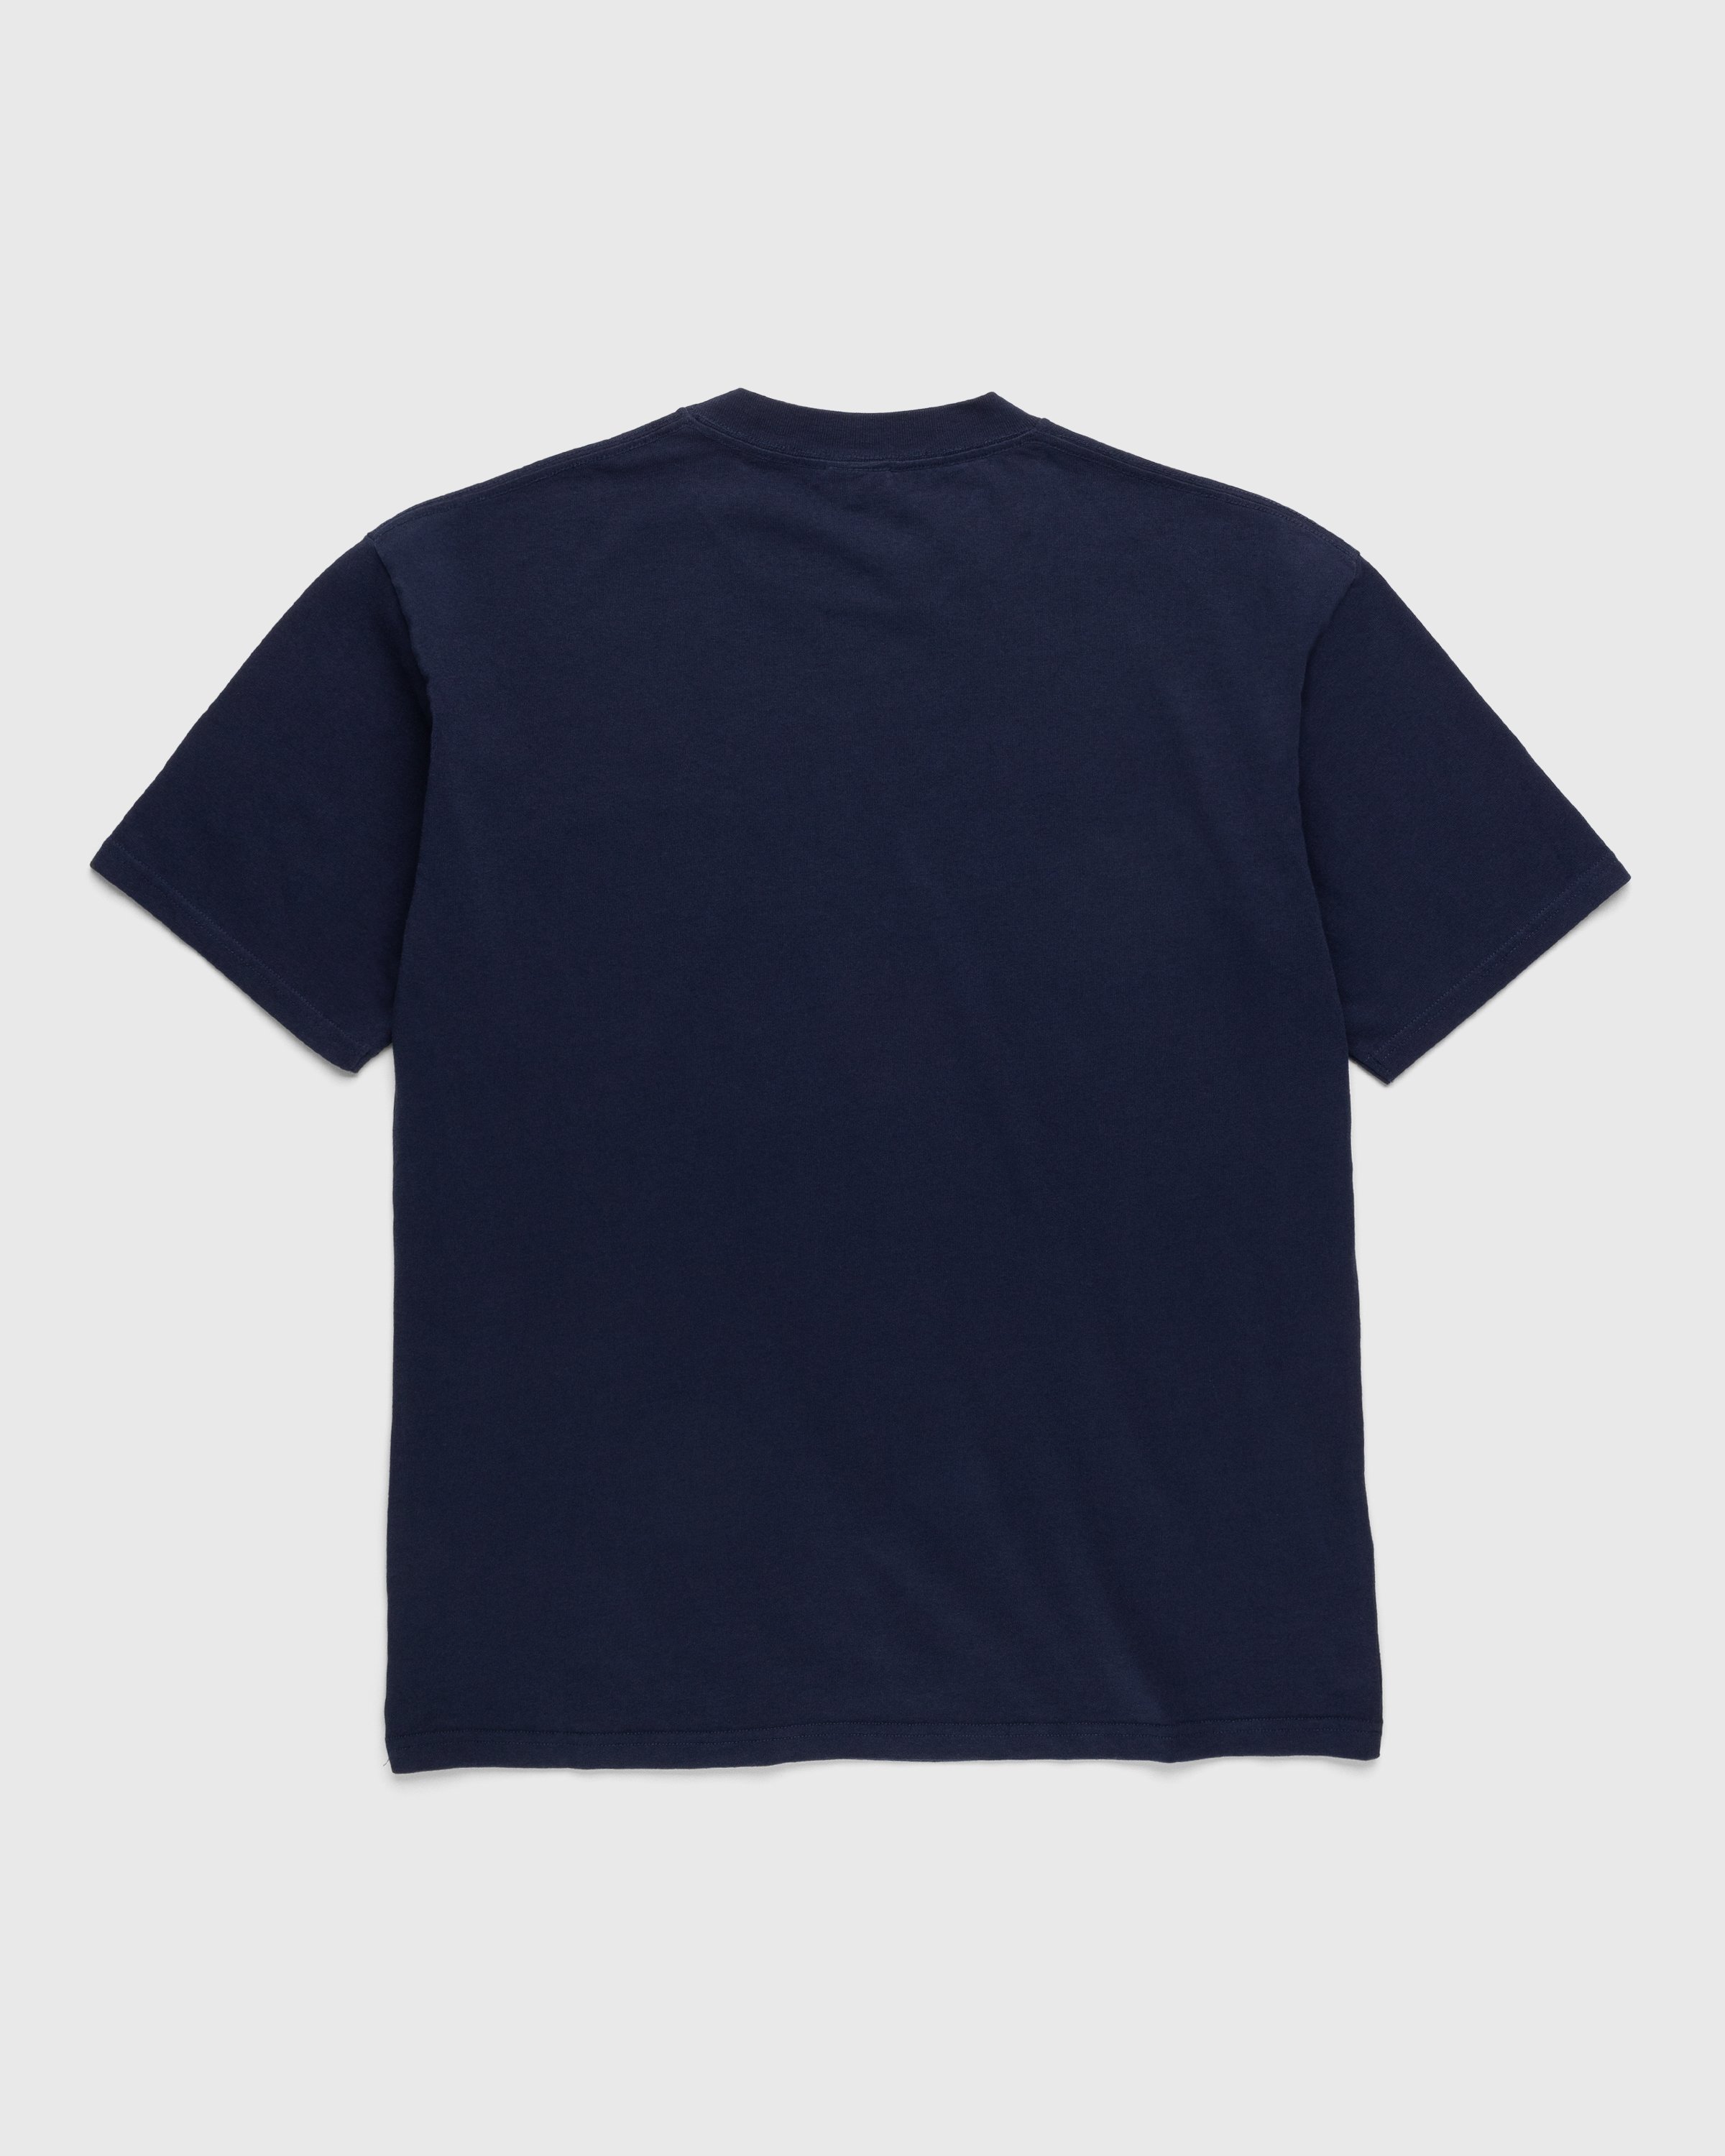 Highsnobiety - Not In Paris 4 Logo T-Shirt Navy - Clothing - Blue - Image 2